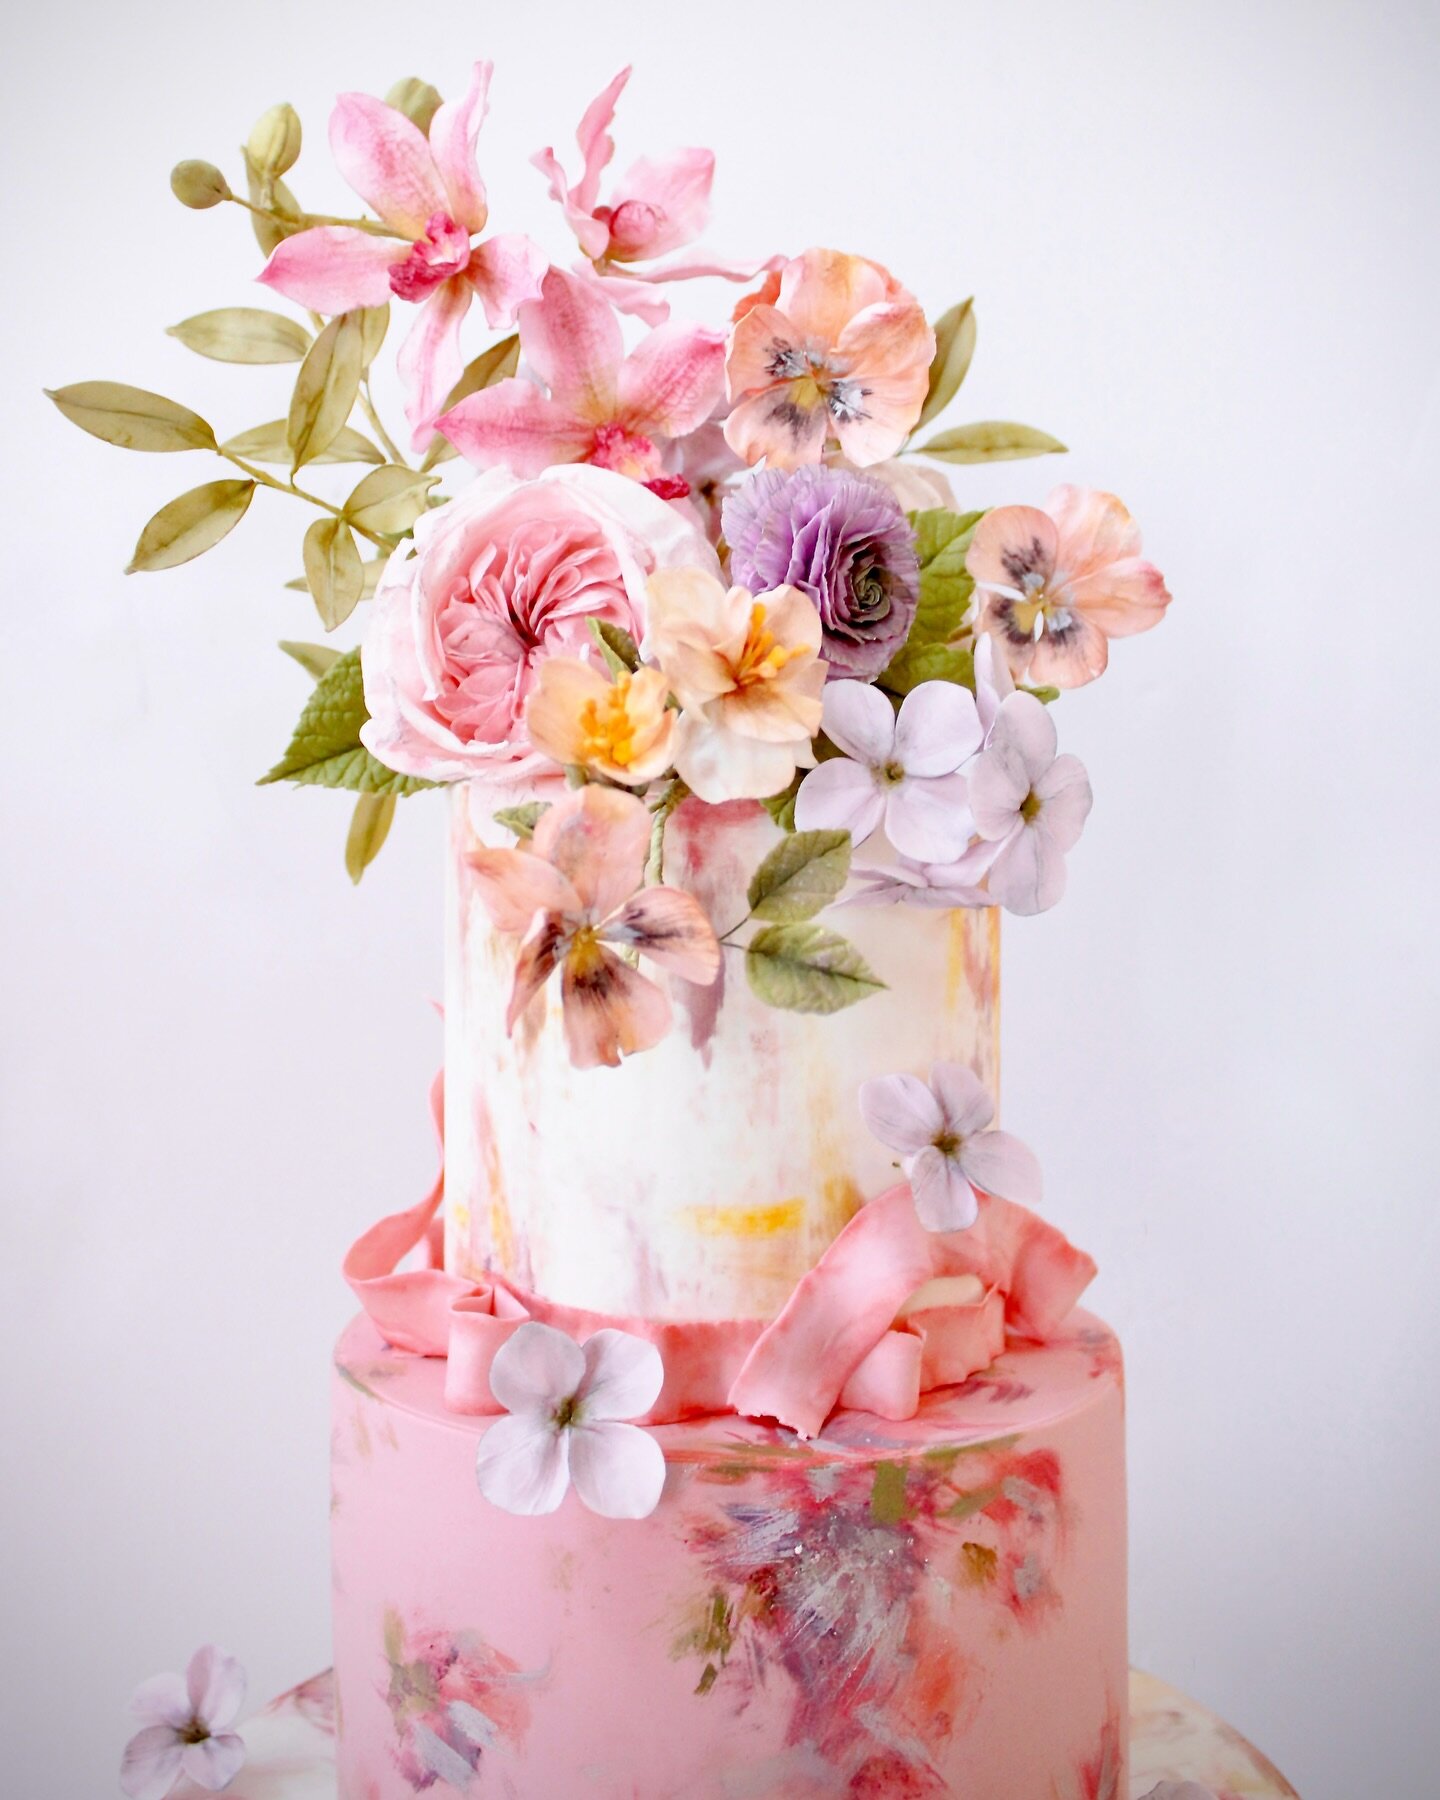 Fun and Elegance, you can have both! 
.
.
.
.
.
#wedding #weddings #weddingcake #weddingcakes #cake #cakedecorating #cakeart #cakeartist #weddinginspiration #sugarflowers #sugarart #gumpasteflowers #summerwedding #pghwedding #burghbrides #floral #flo